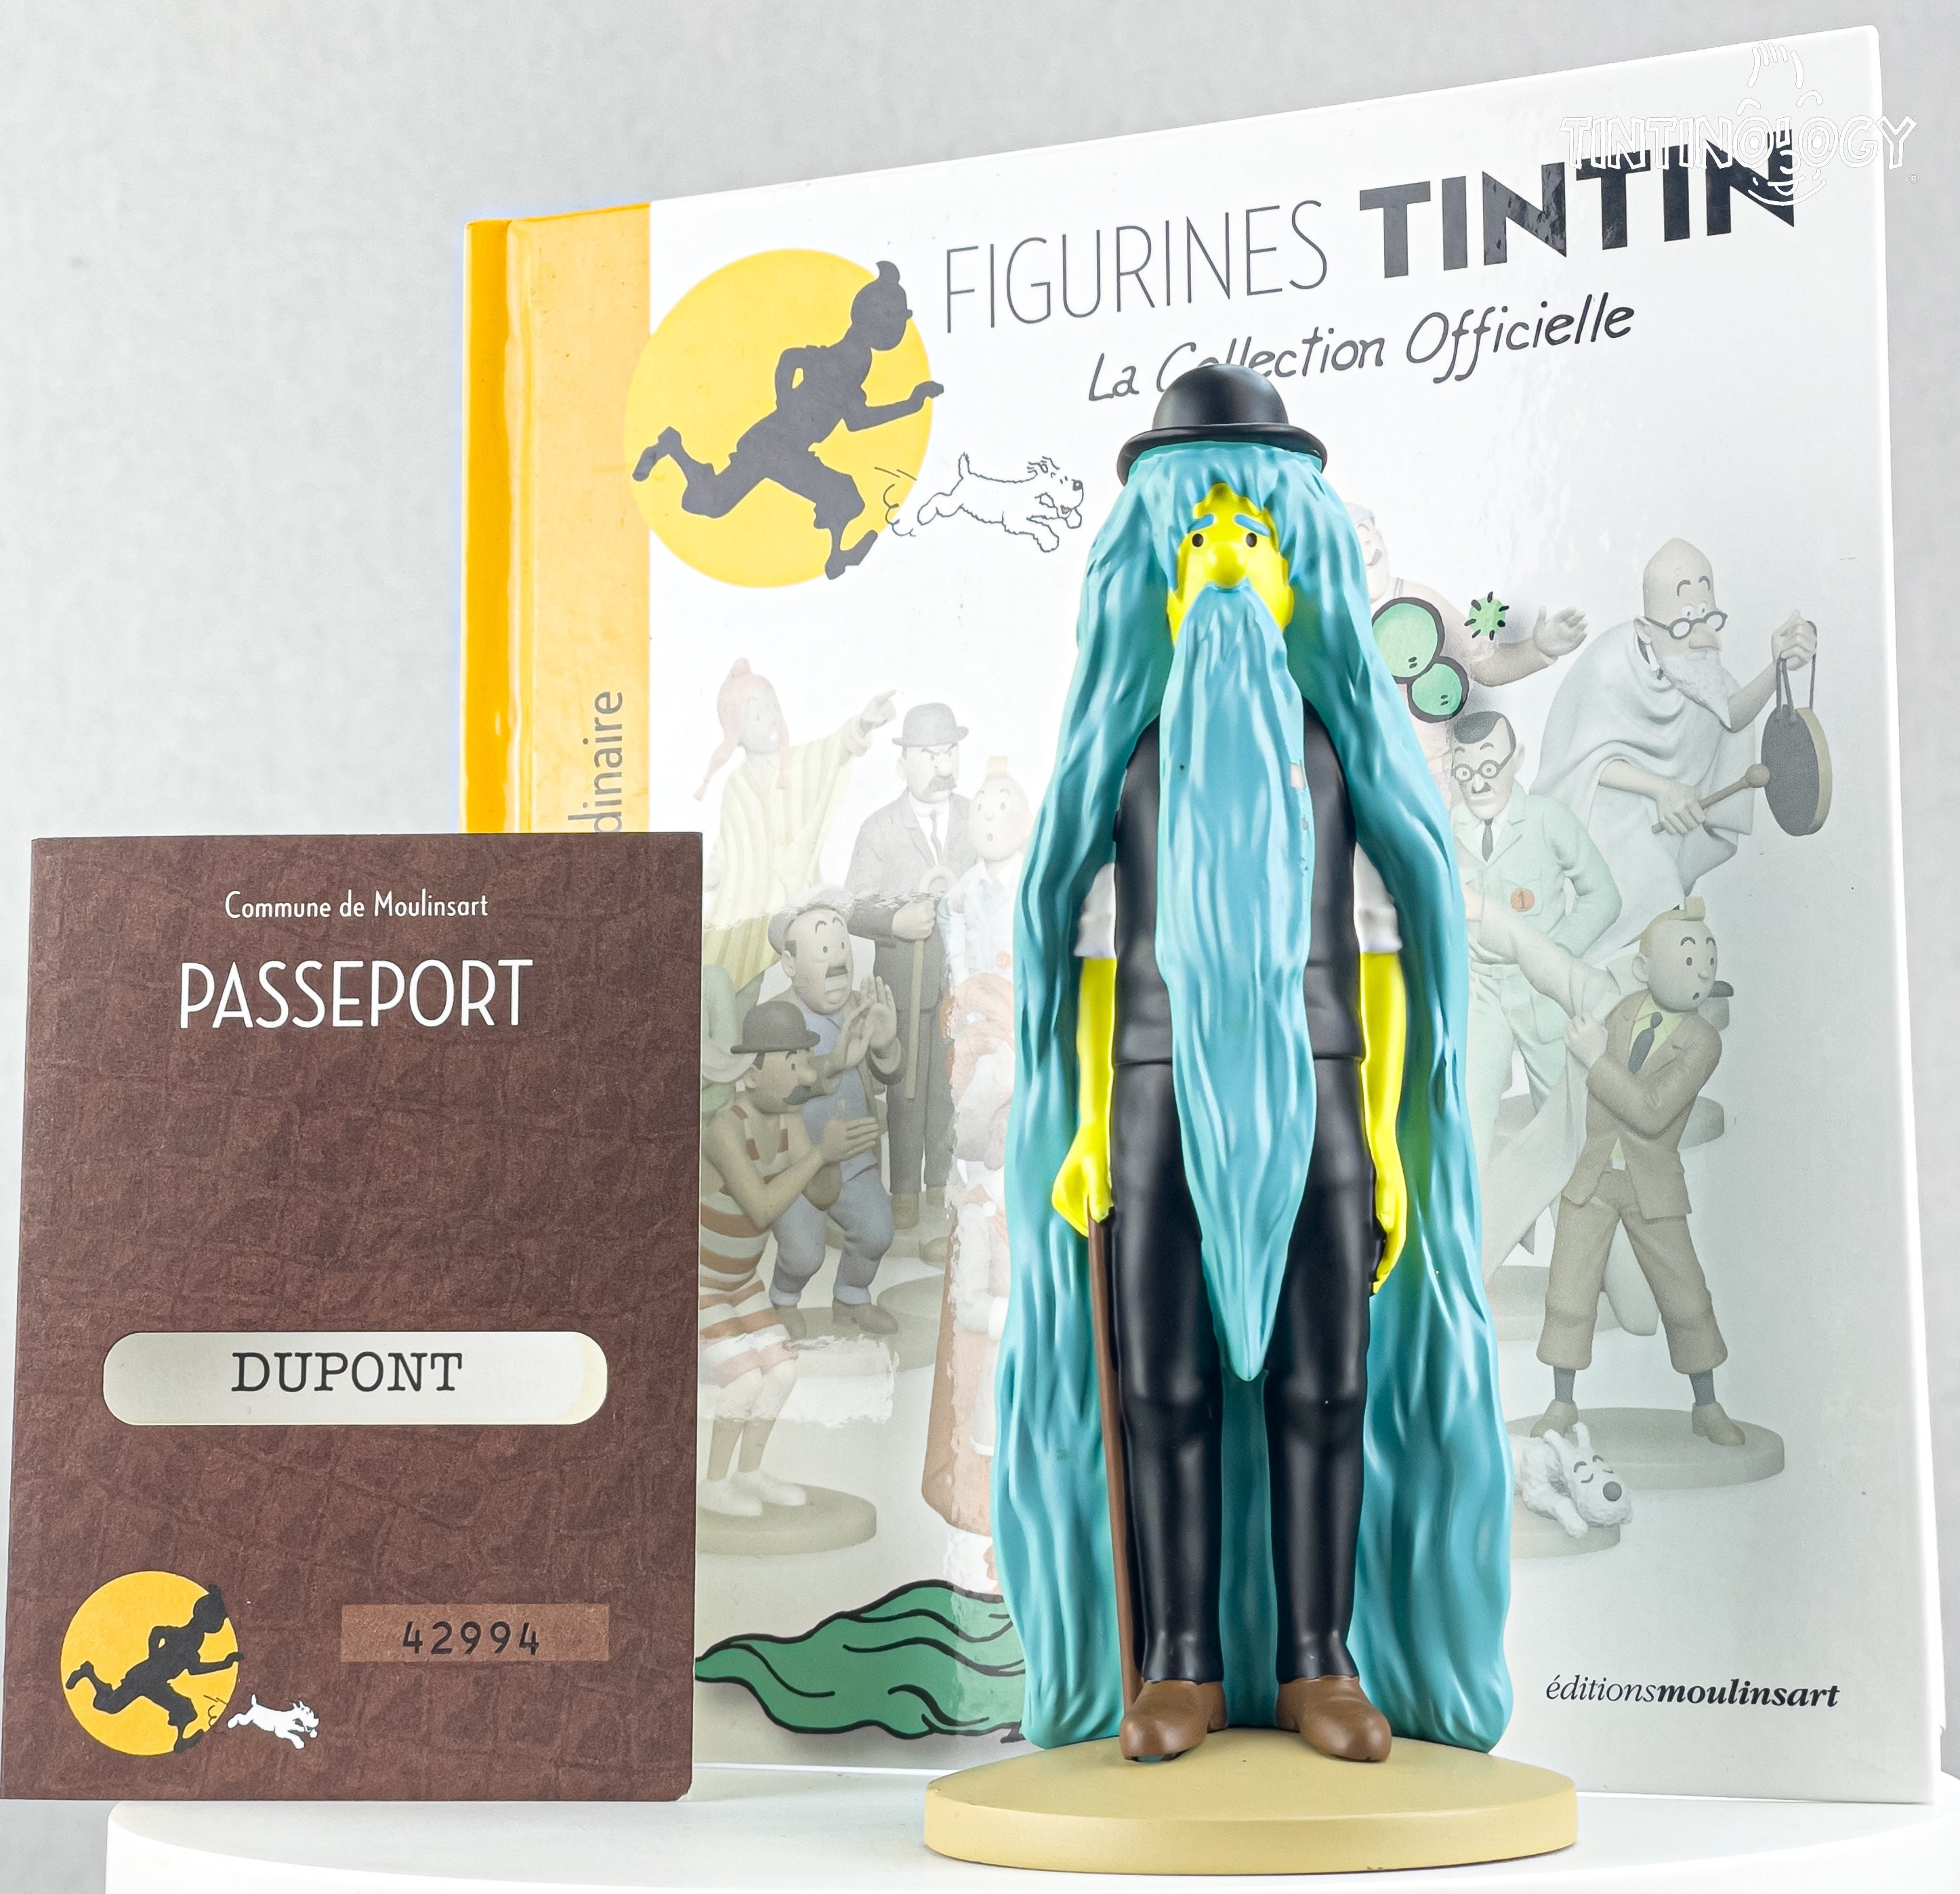 Figurine Tintin: Dupond Chinois 42234 Moulinsart